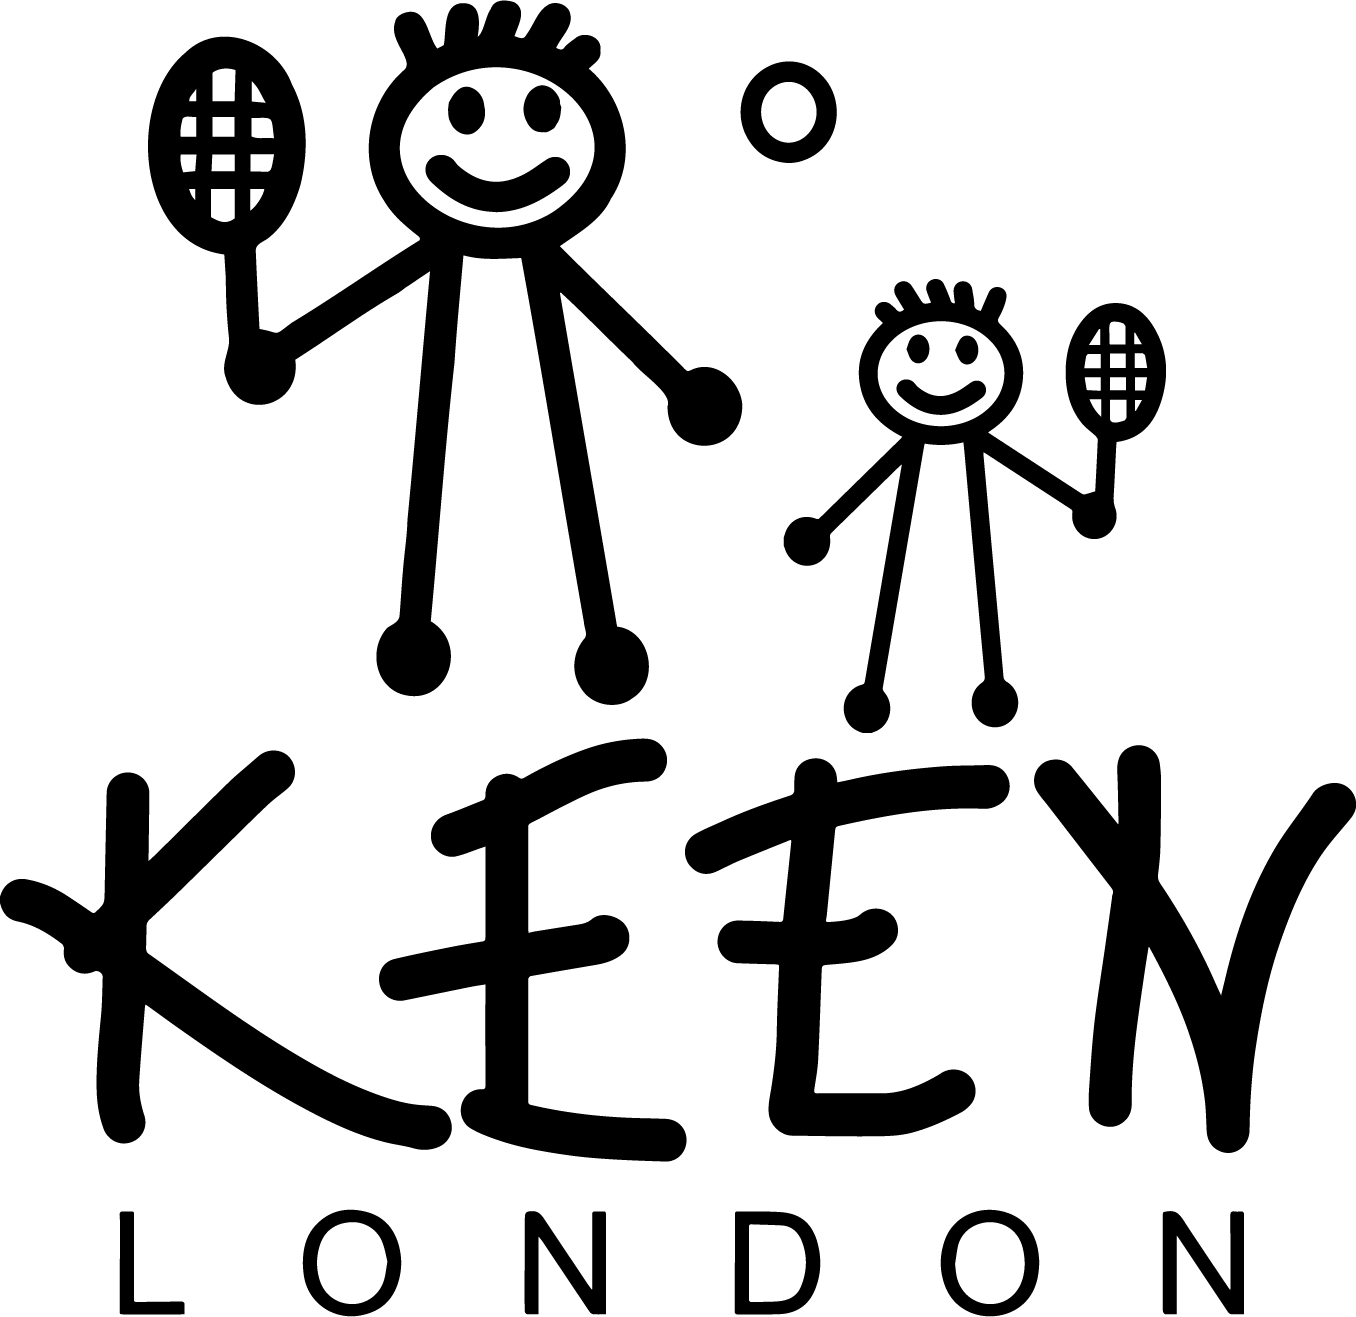 KEEN London Logo